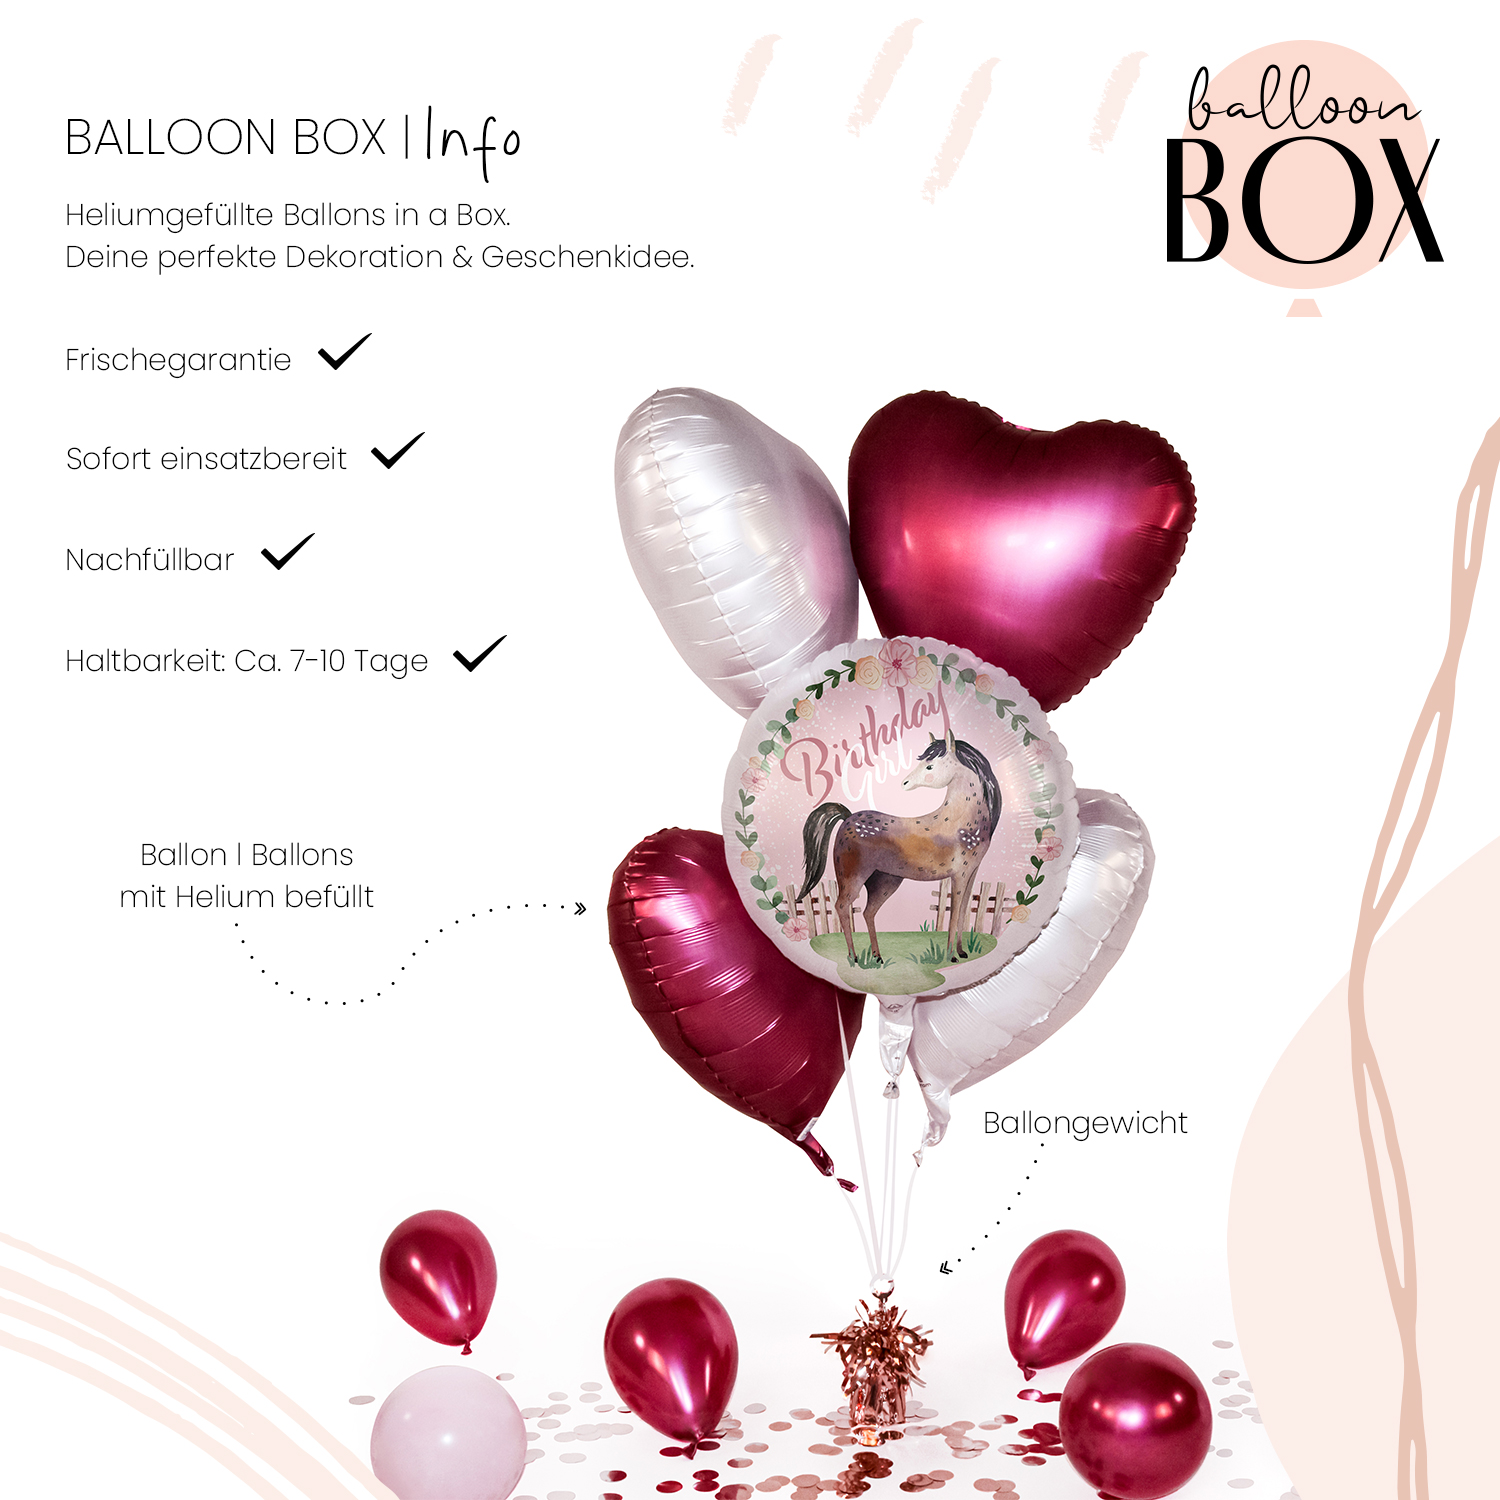 Heliumballon in a Box - Charming Horse Birthday